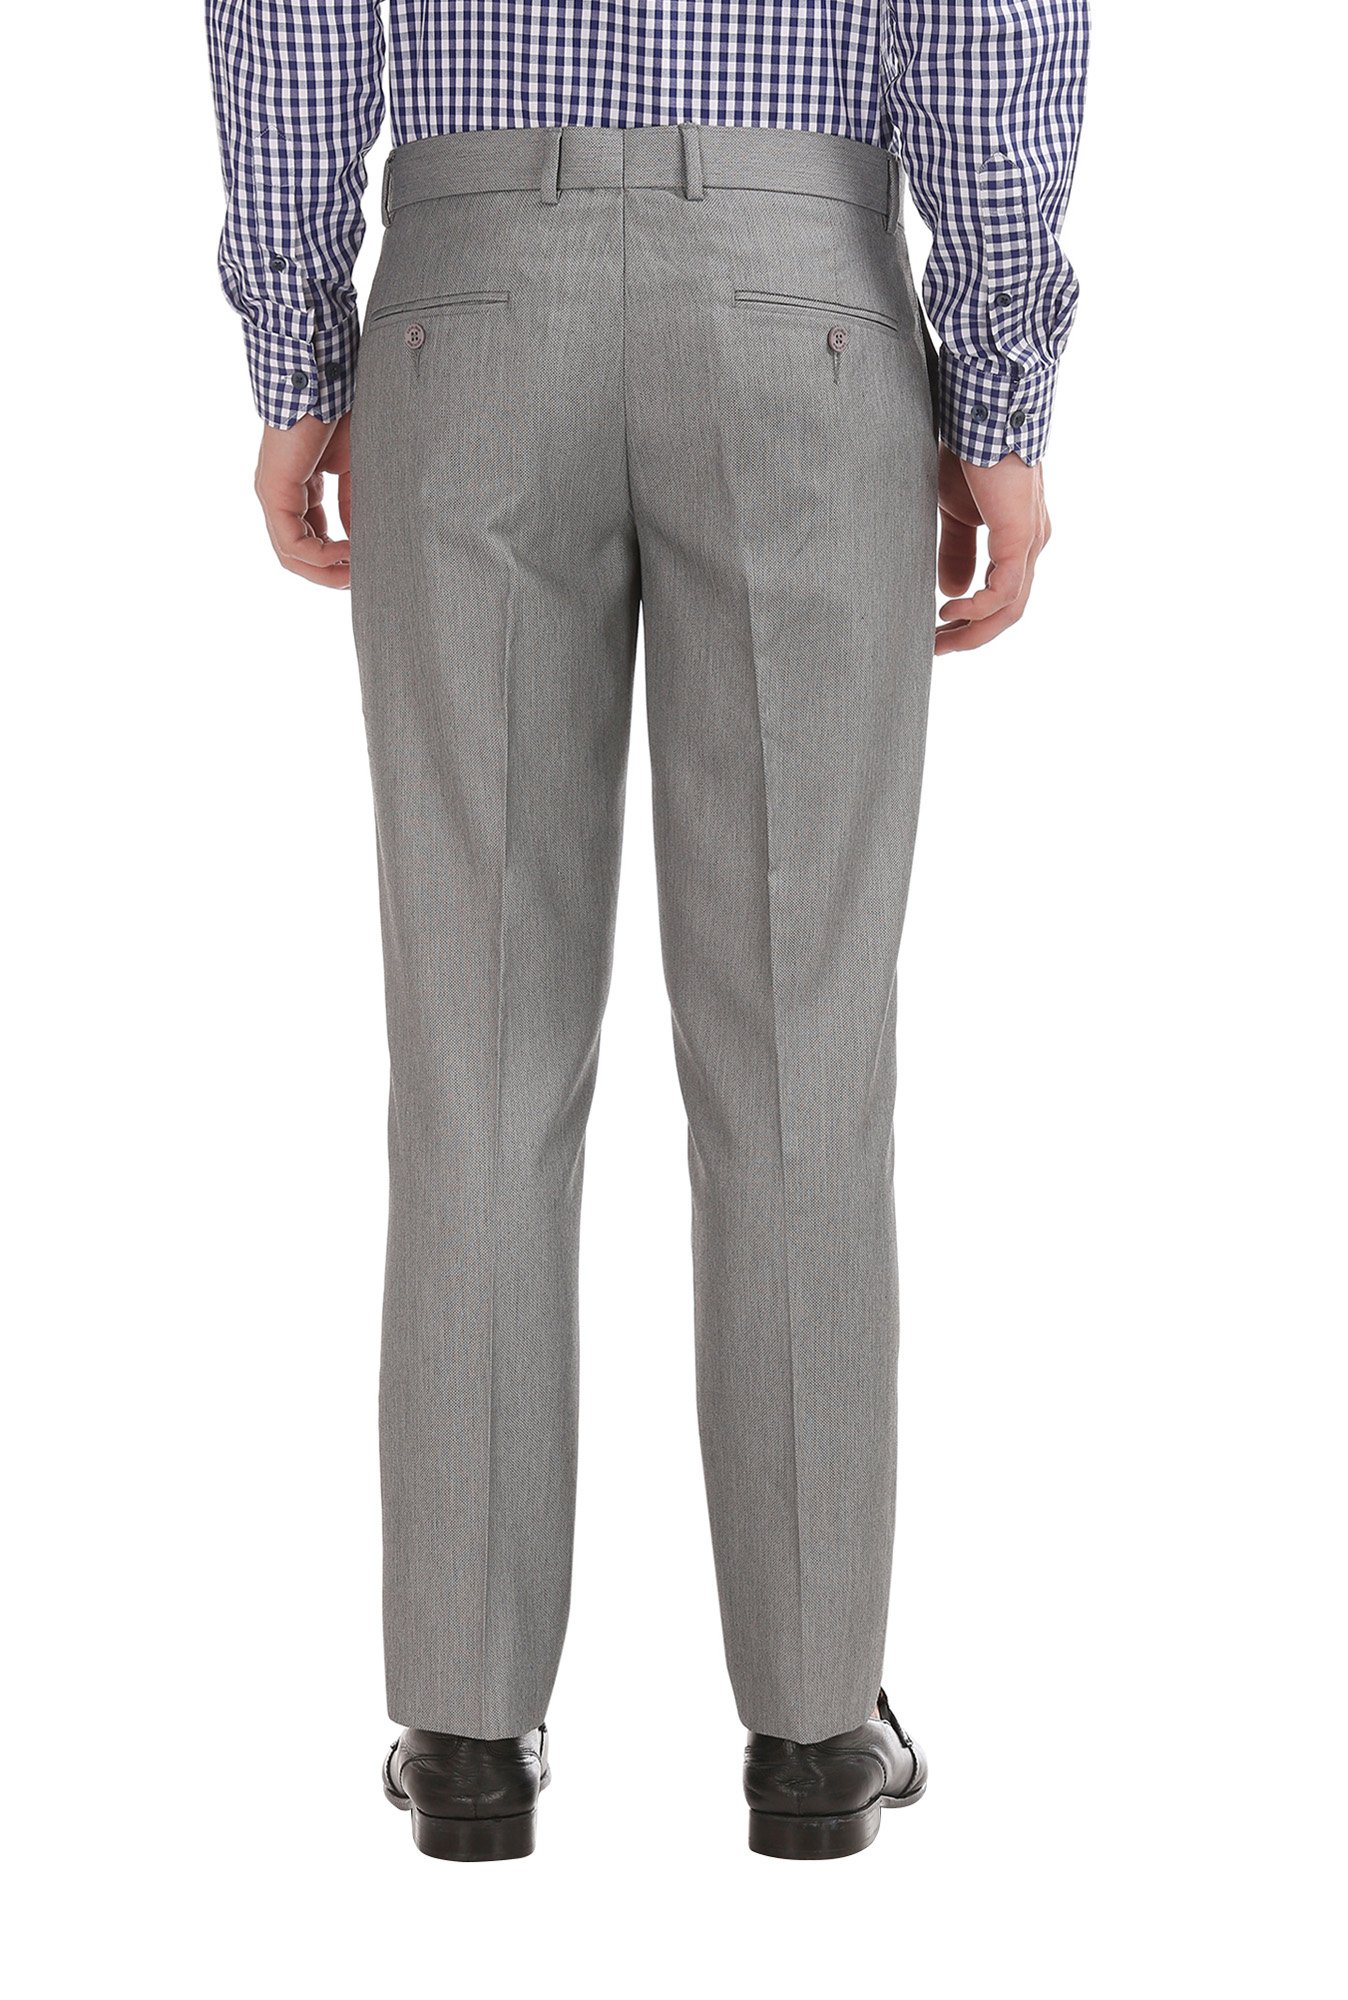 Buy Excalibur Navy Regular Fit Solid Trousers for Men Online @ Tata CLiQ